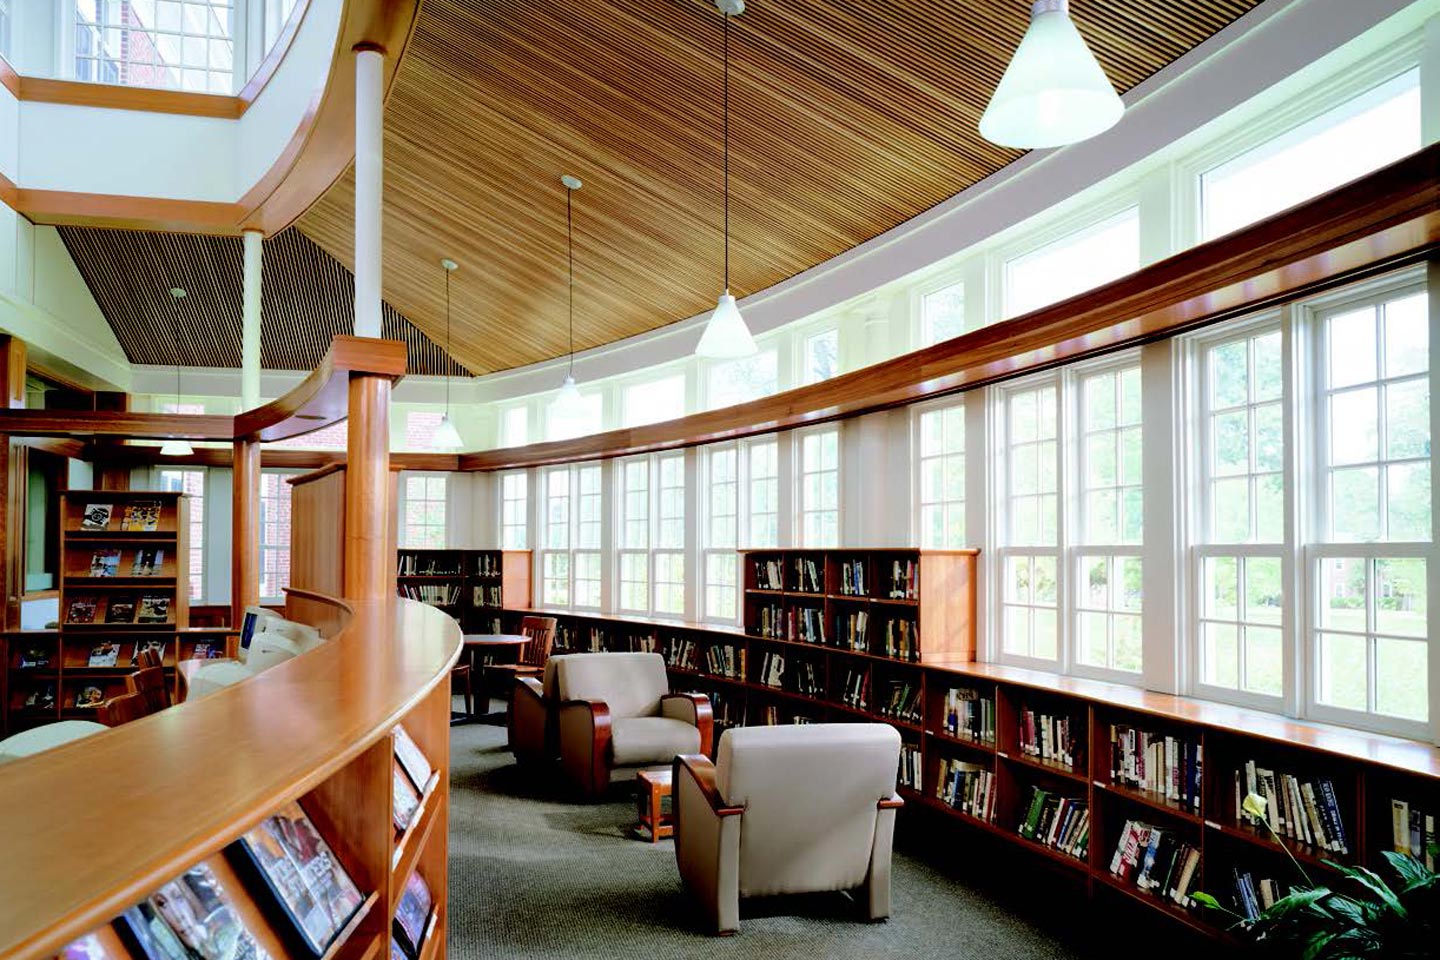 The Salisbury School's Phinny Library main reading room.